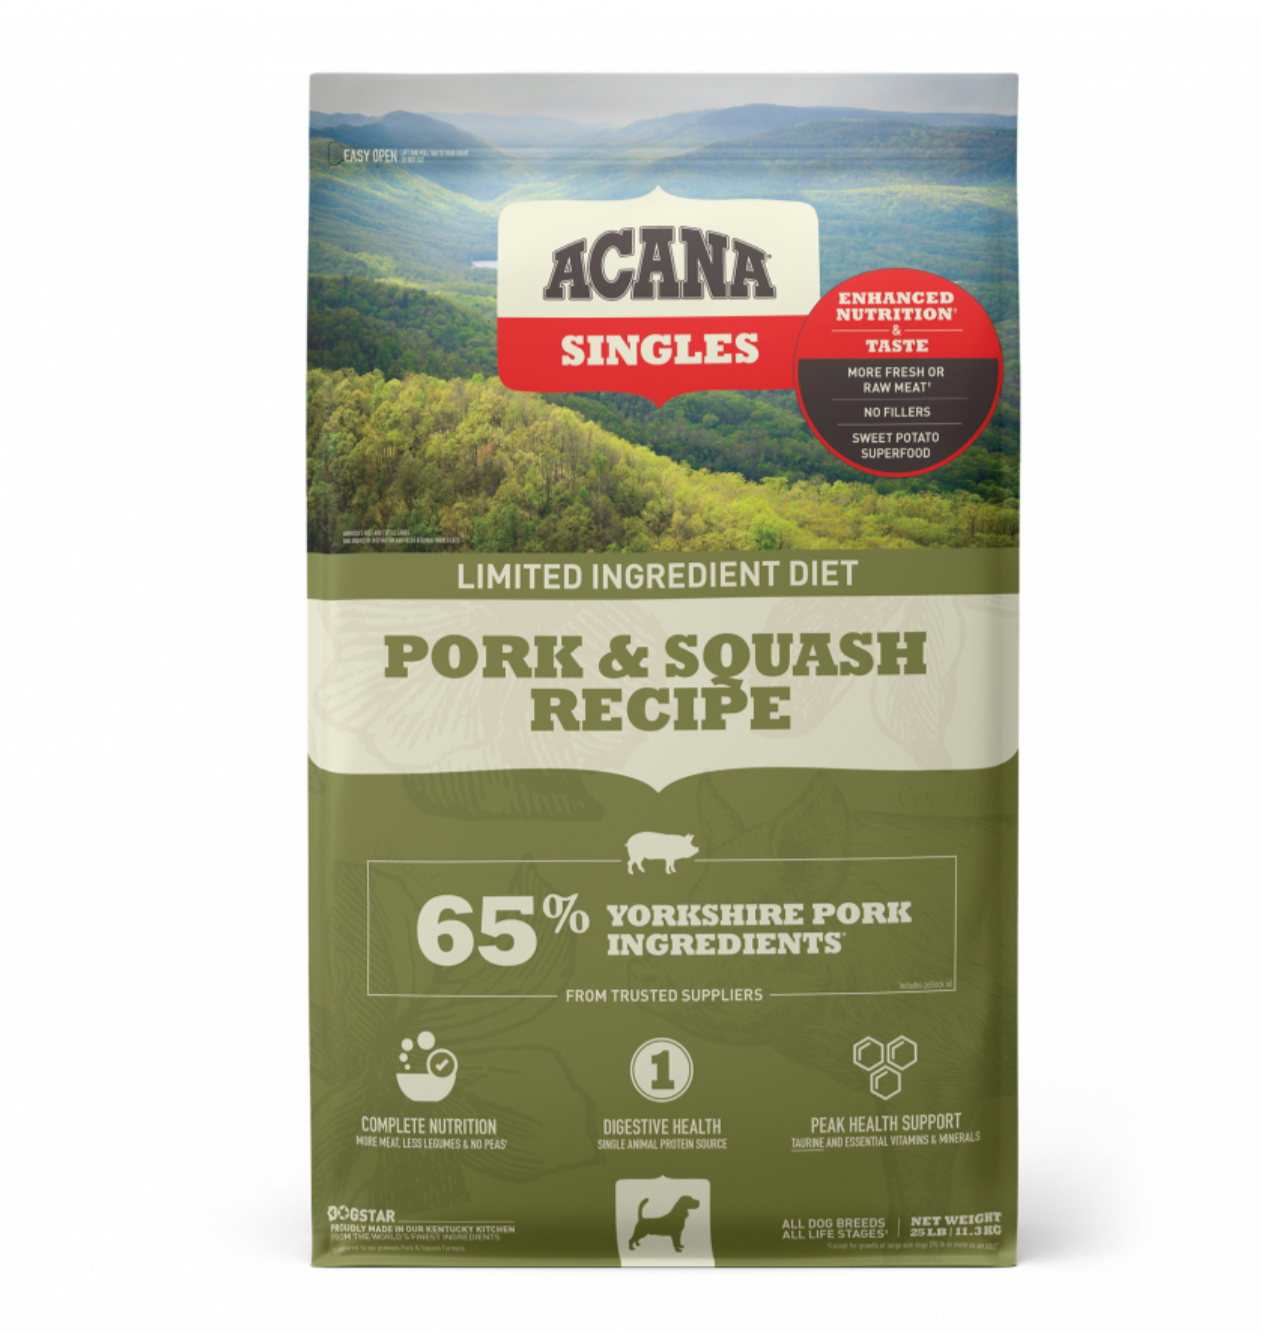 Acana Singles Limited Ingredient Diet Pork & Squash Dry Dog Food